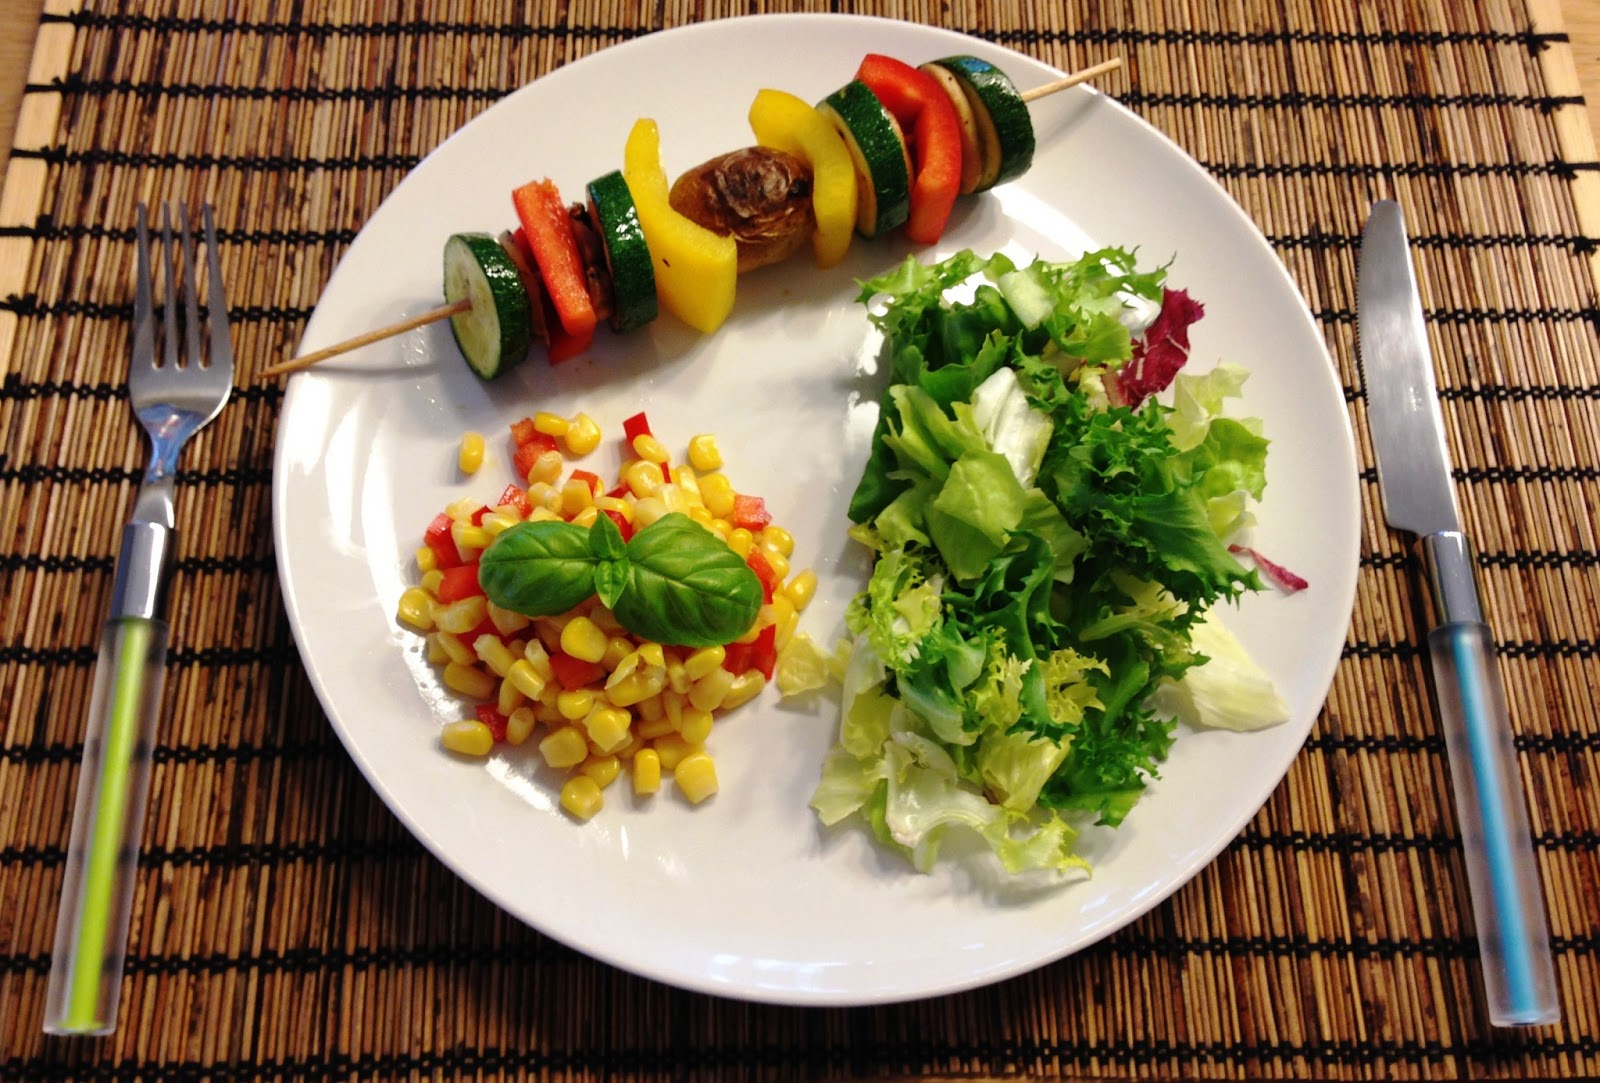 Gurken Champignon Salat Mit Peperoni — Rezepte Suchen